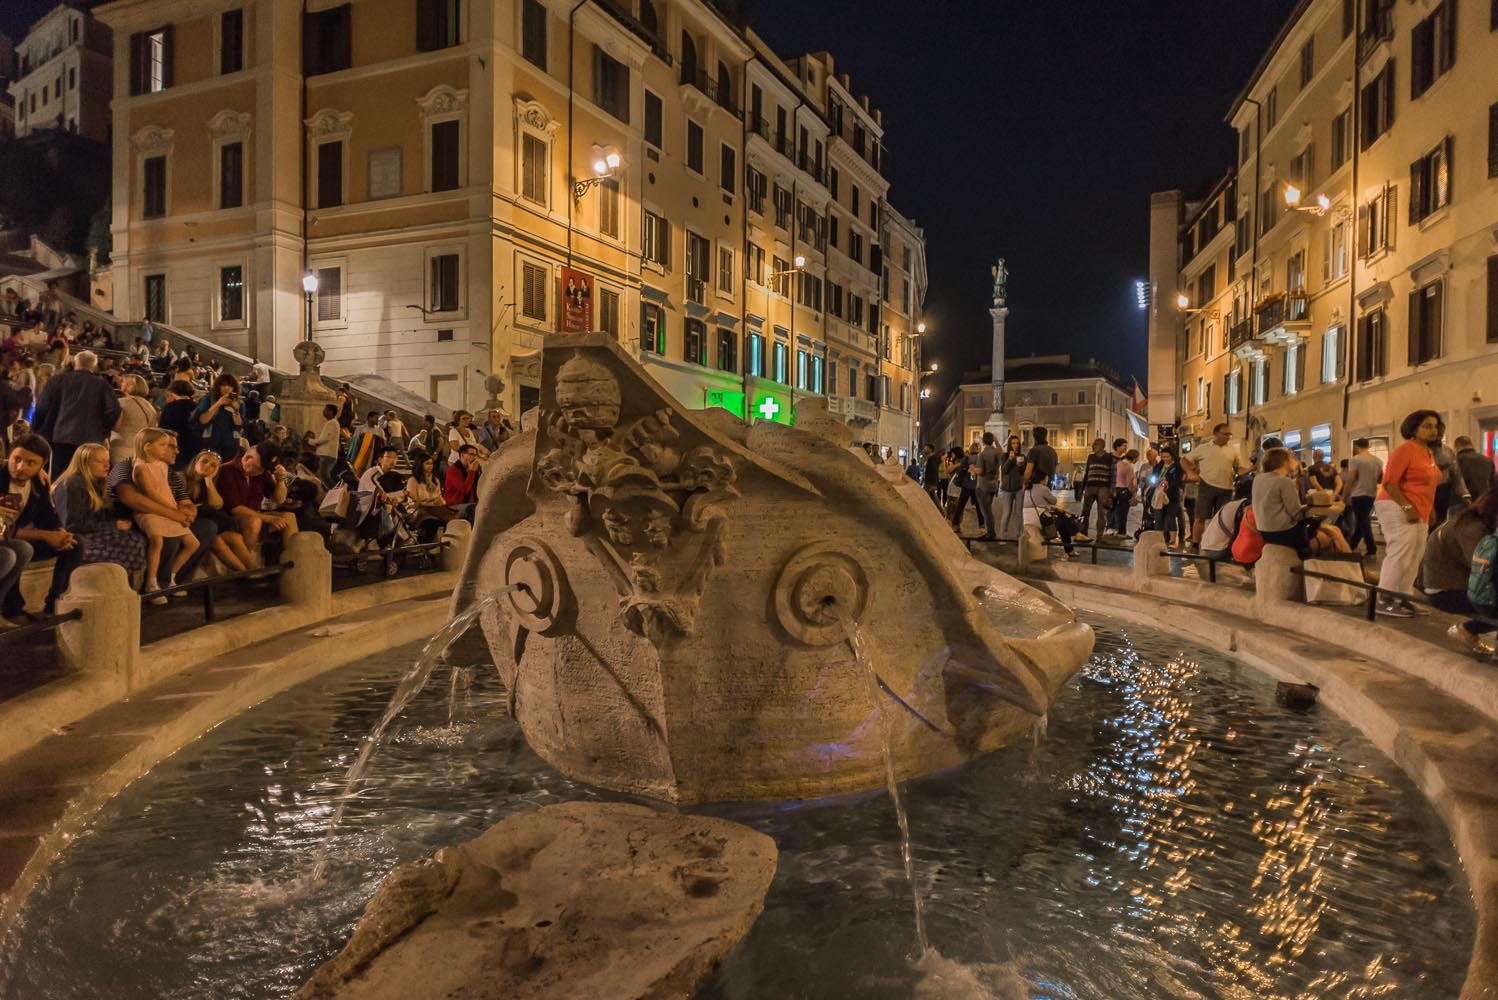 The fountain "Barcaccia" in Piazza Spagna, Rome, Italy